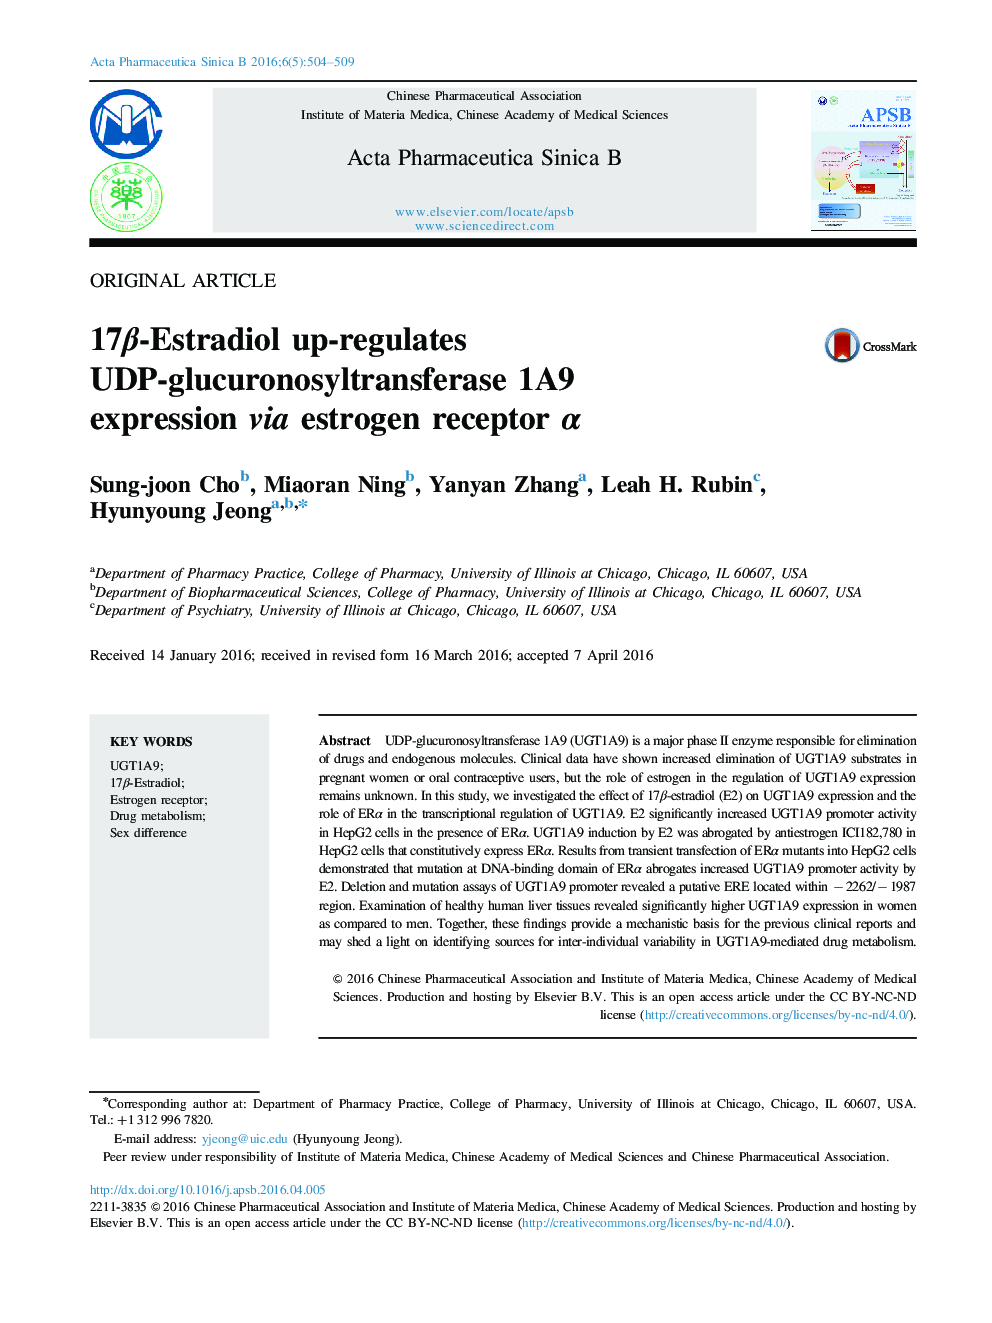 17Î²-Estradiol up-regulates UDP-glucuronosyltransferase 1A9 expression via estrogen receptor Î±